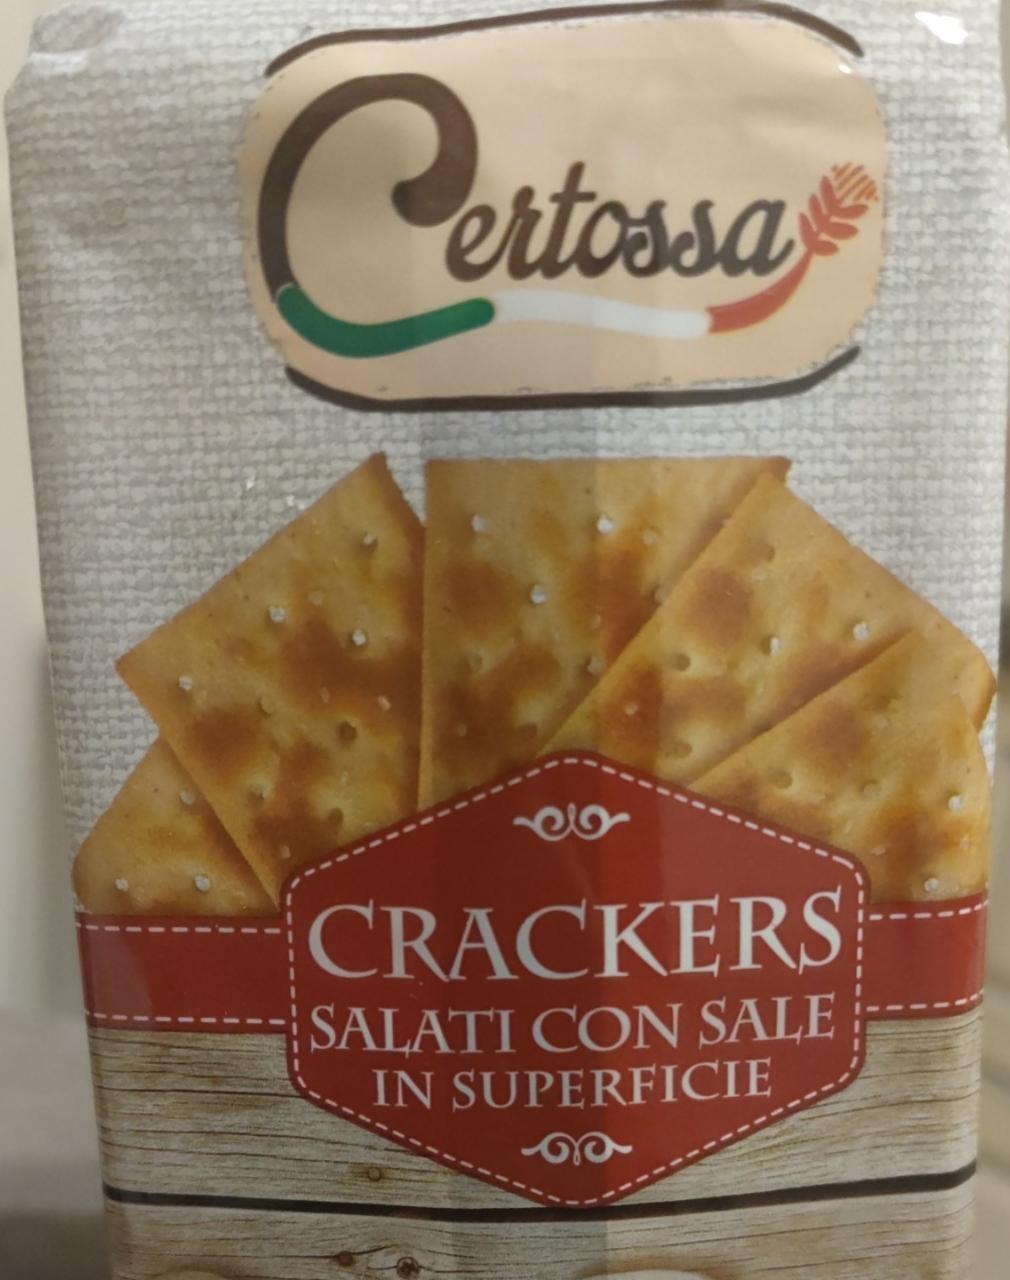 Фото - Crackers salati con sale in superfiie Certossa